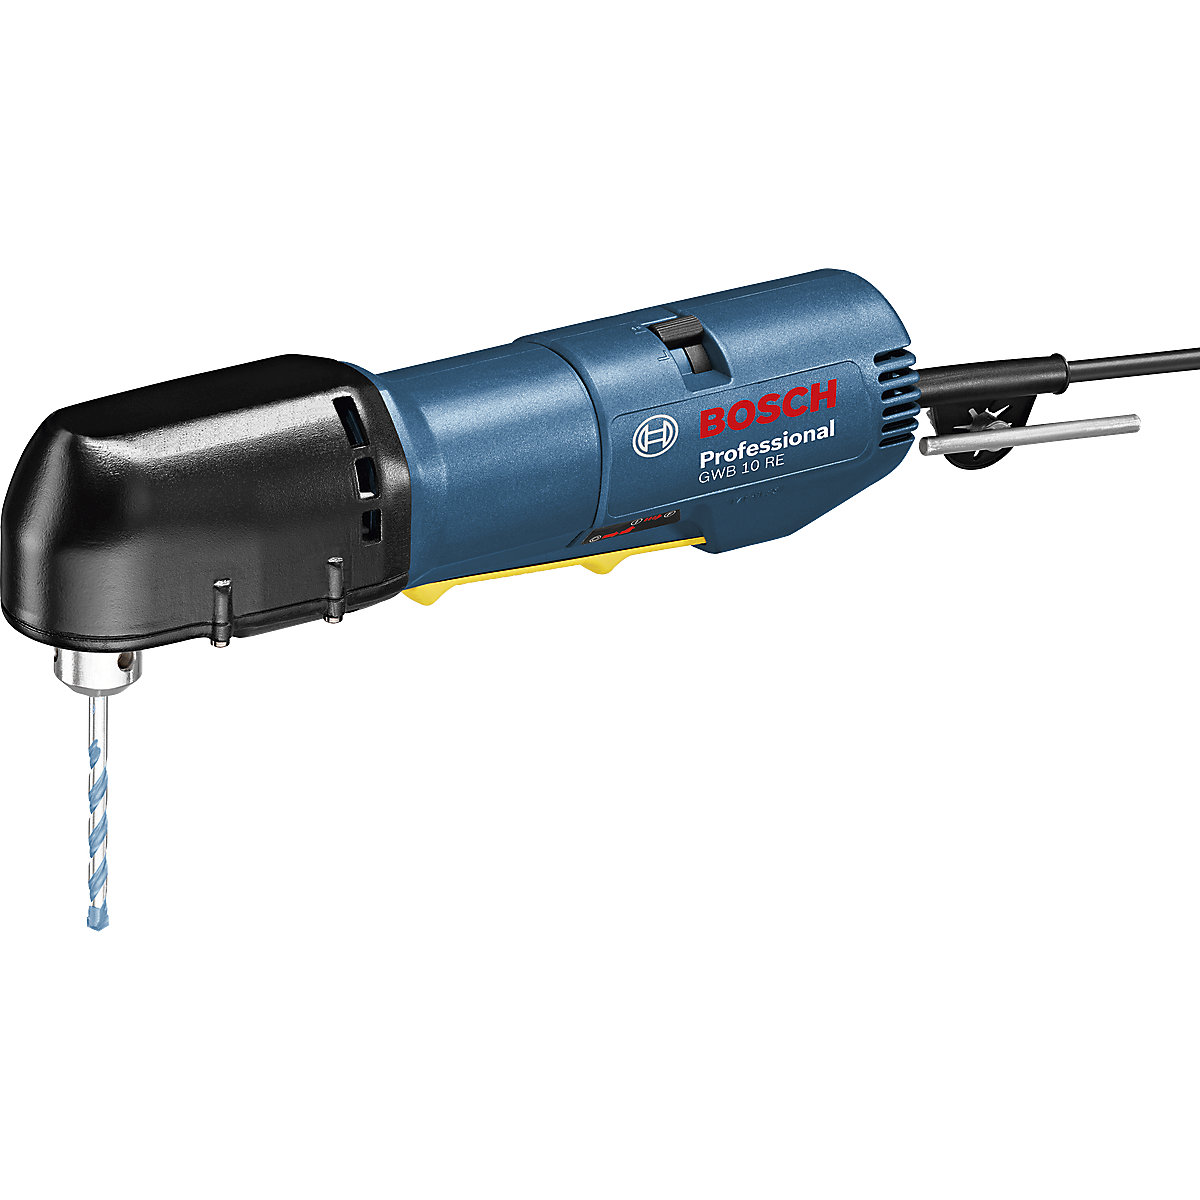 GWB 10 RE Professional angle drill - Bosch